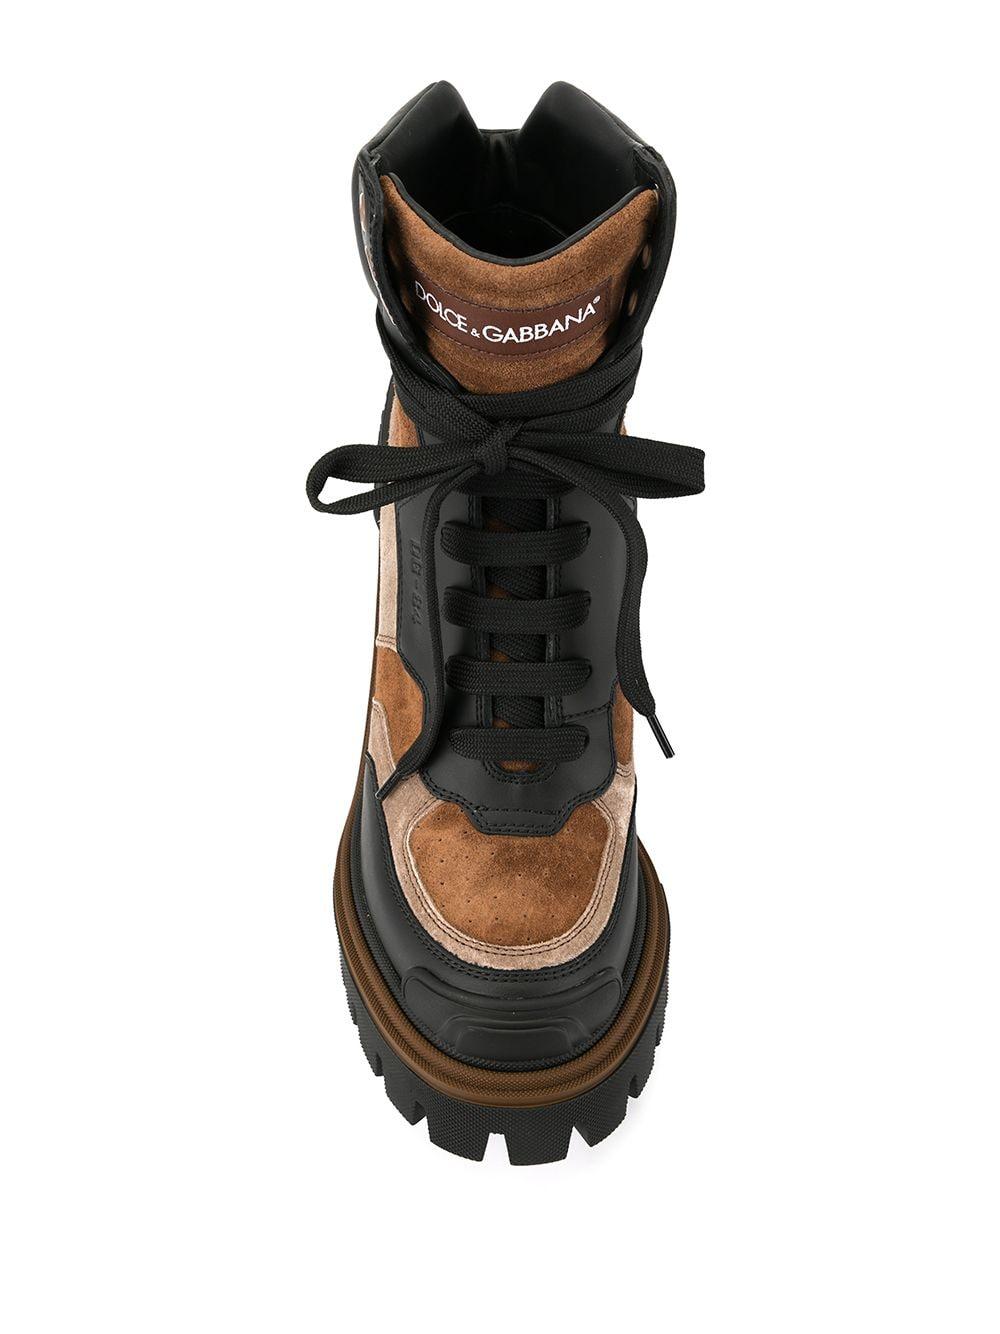 Dolce & Gabbana Rubber Trekking Boots in Brown - Lyst